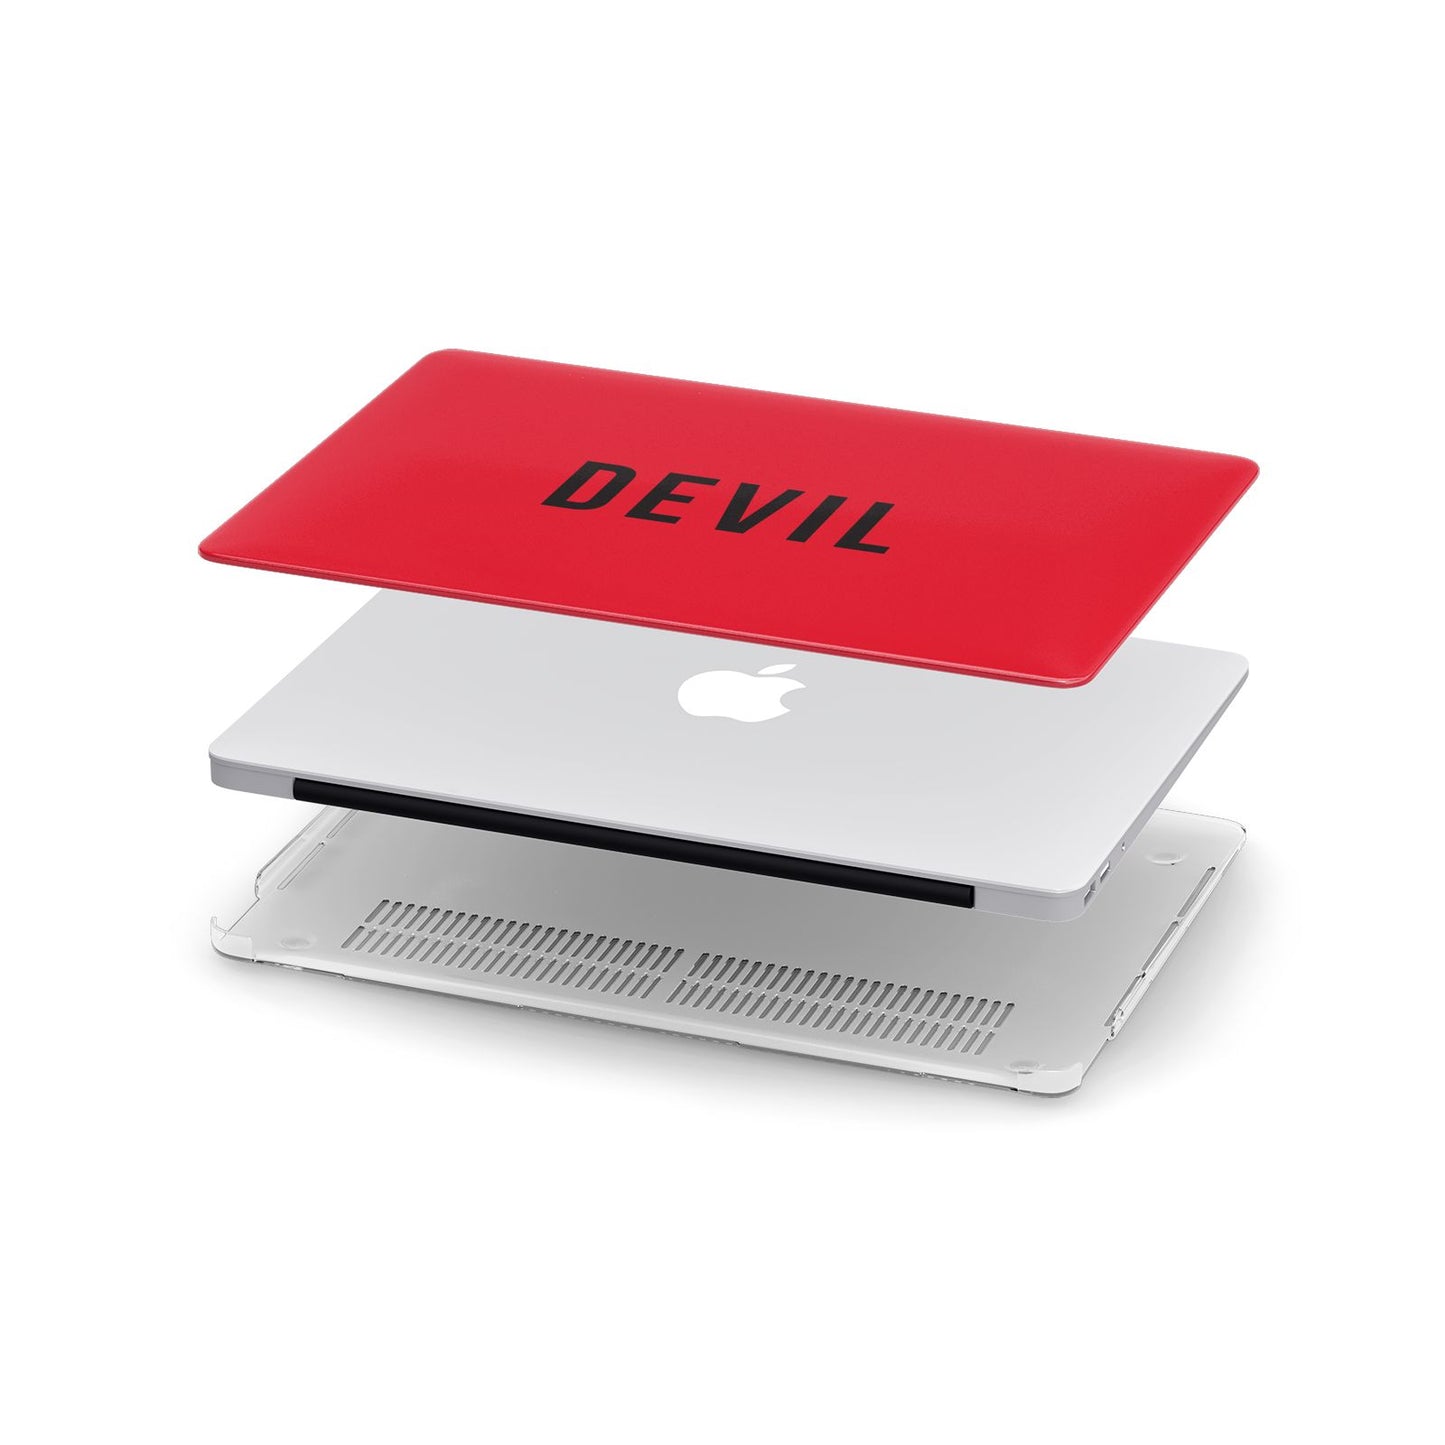 Halloween Red Devil Apple MacBook Case in Detail